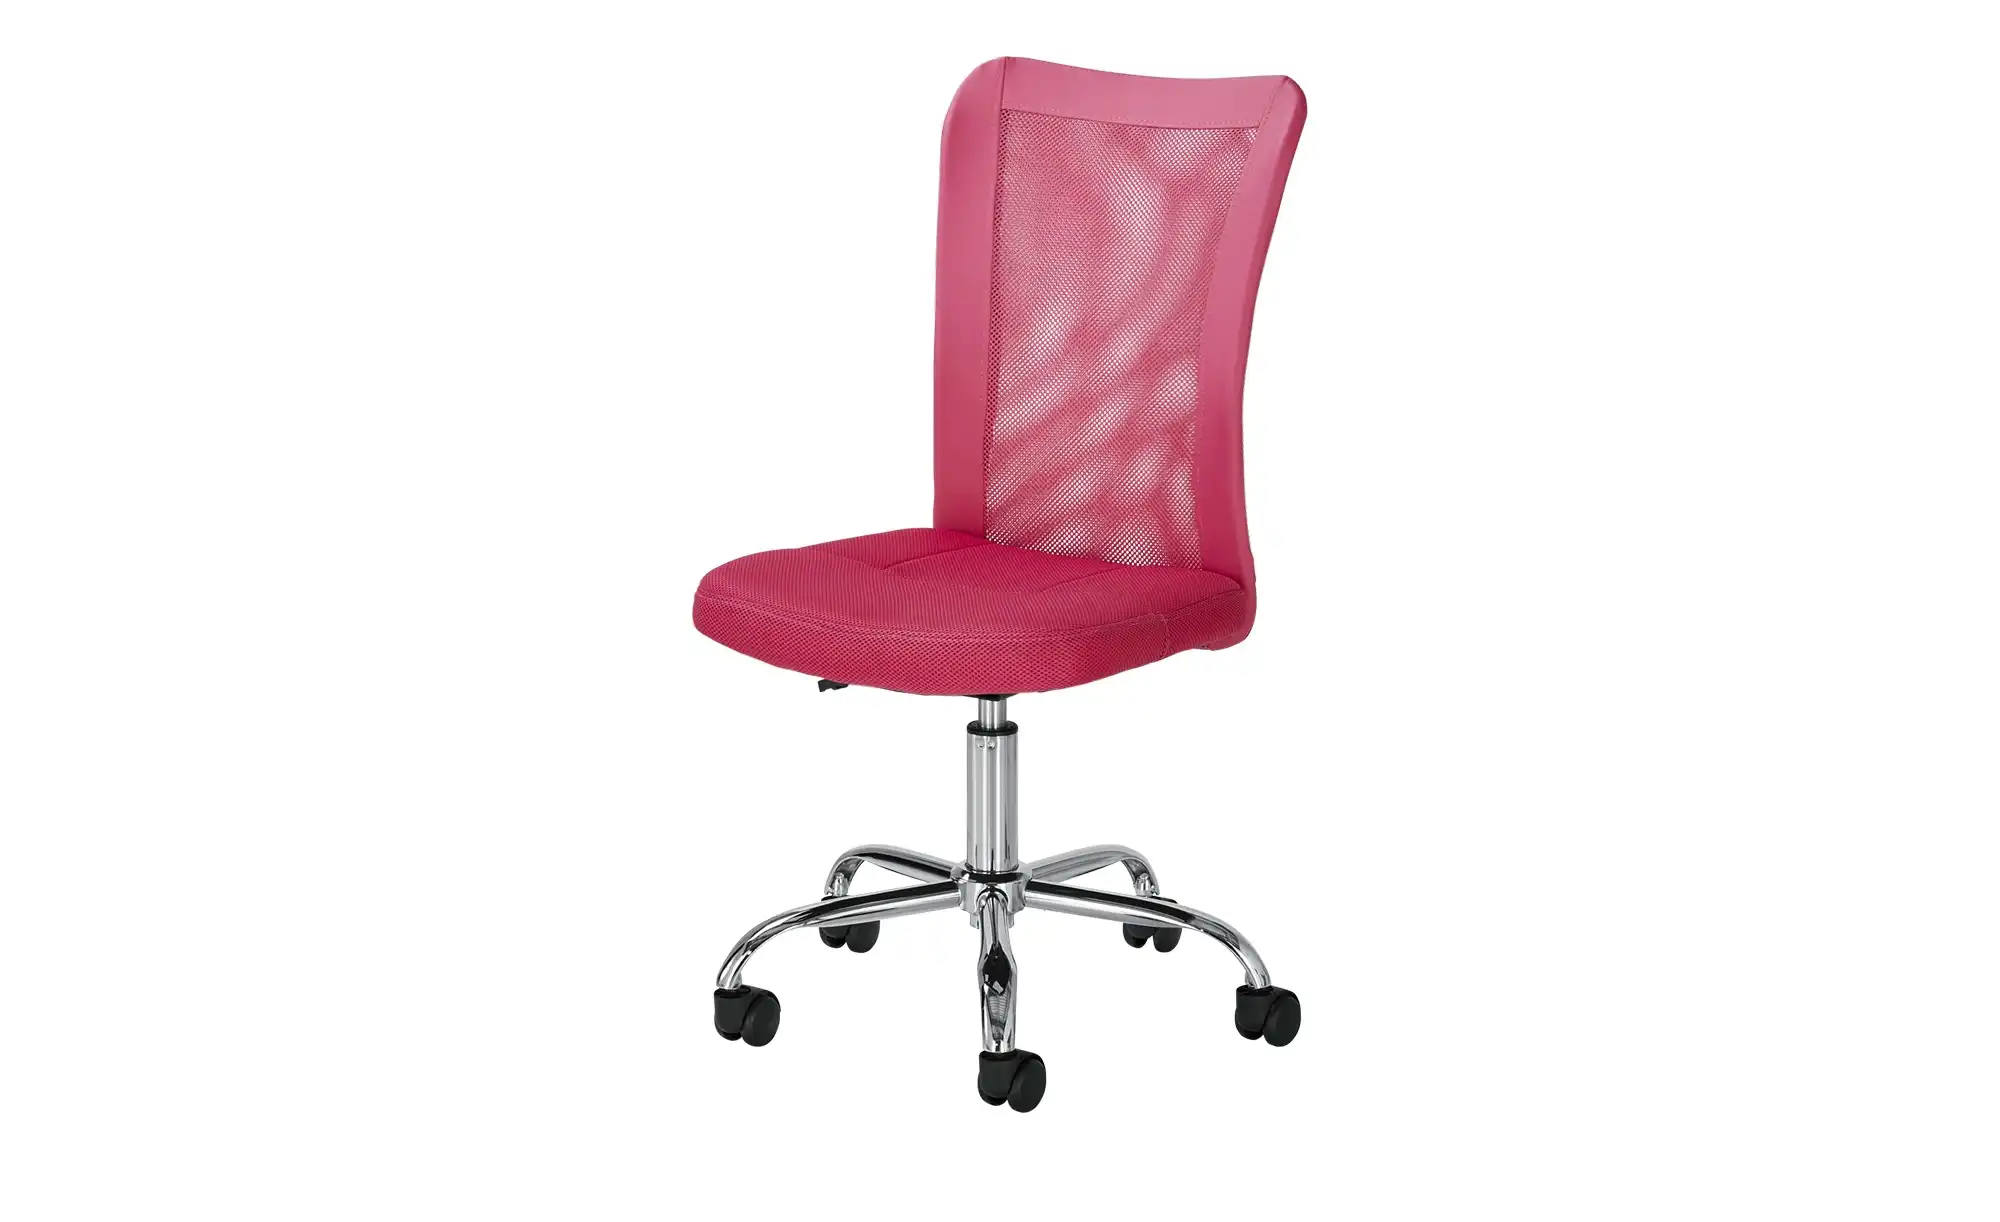 Drehstuhl Ill ¦ rosa pink Stühle Bürostühle Drehstühle Höffner  - Onlineshop Möbel Höffner